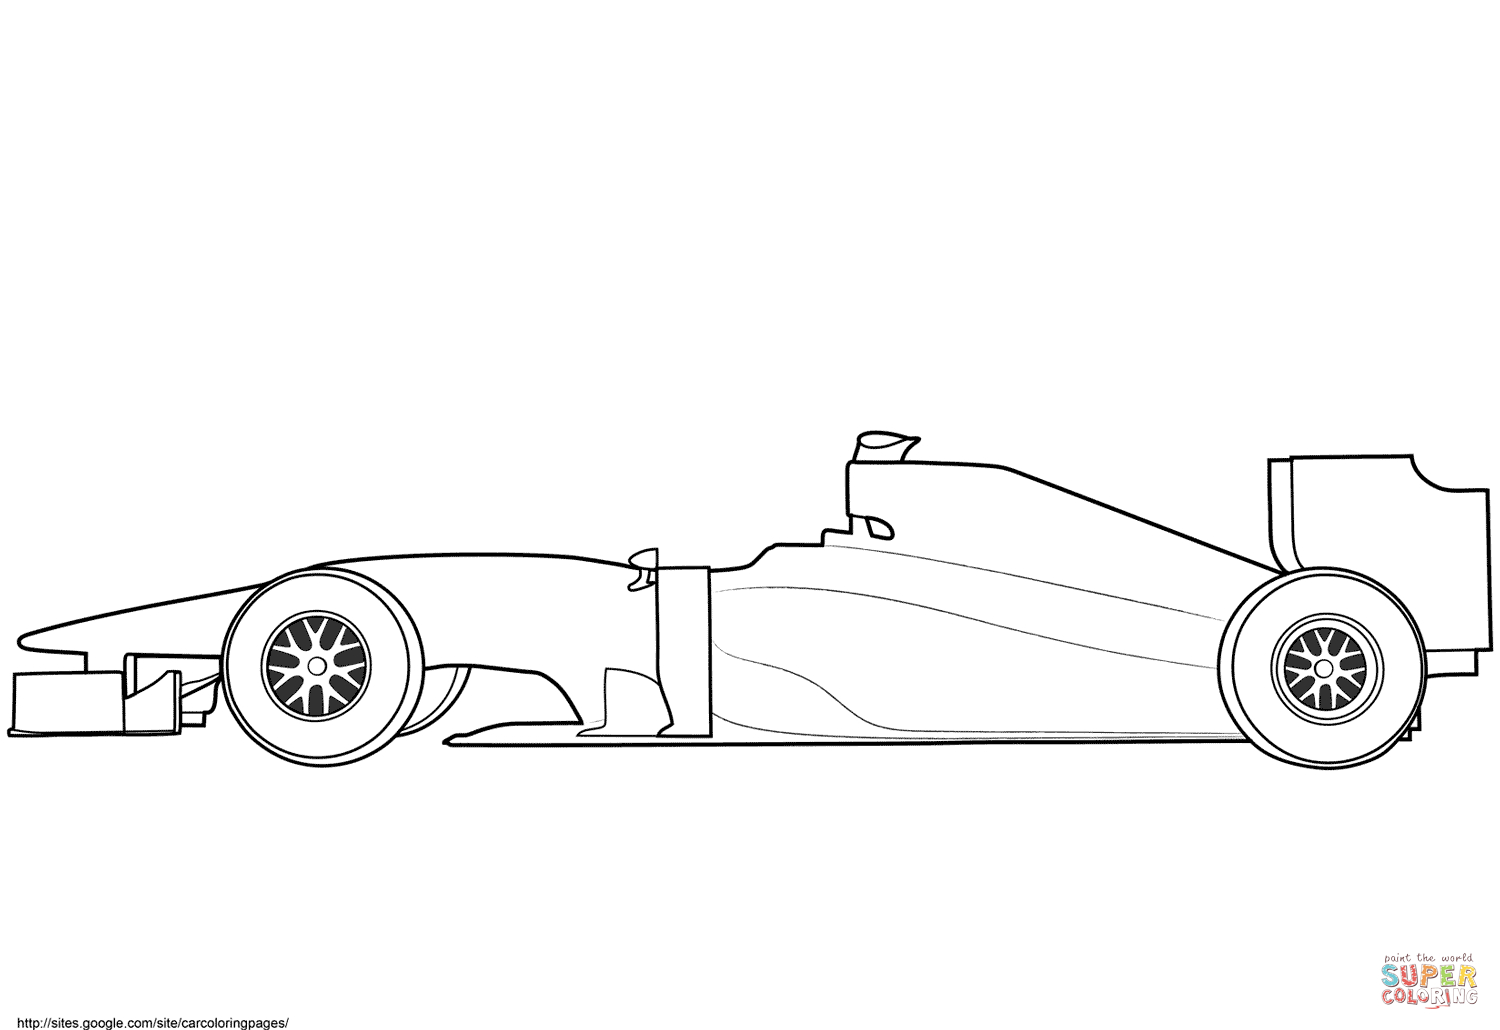 Blank Formula 1 Race Car Coloring Page | Free Printable Regarding Blank Race Car Templates